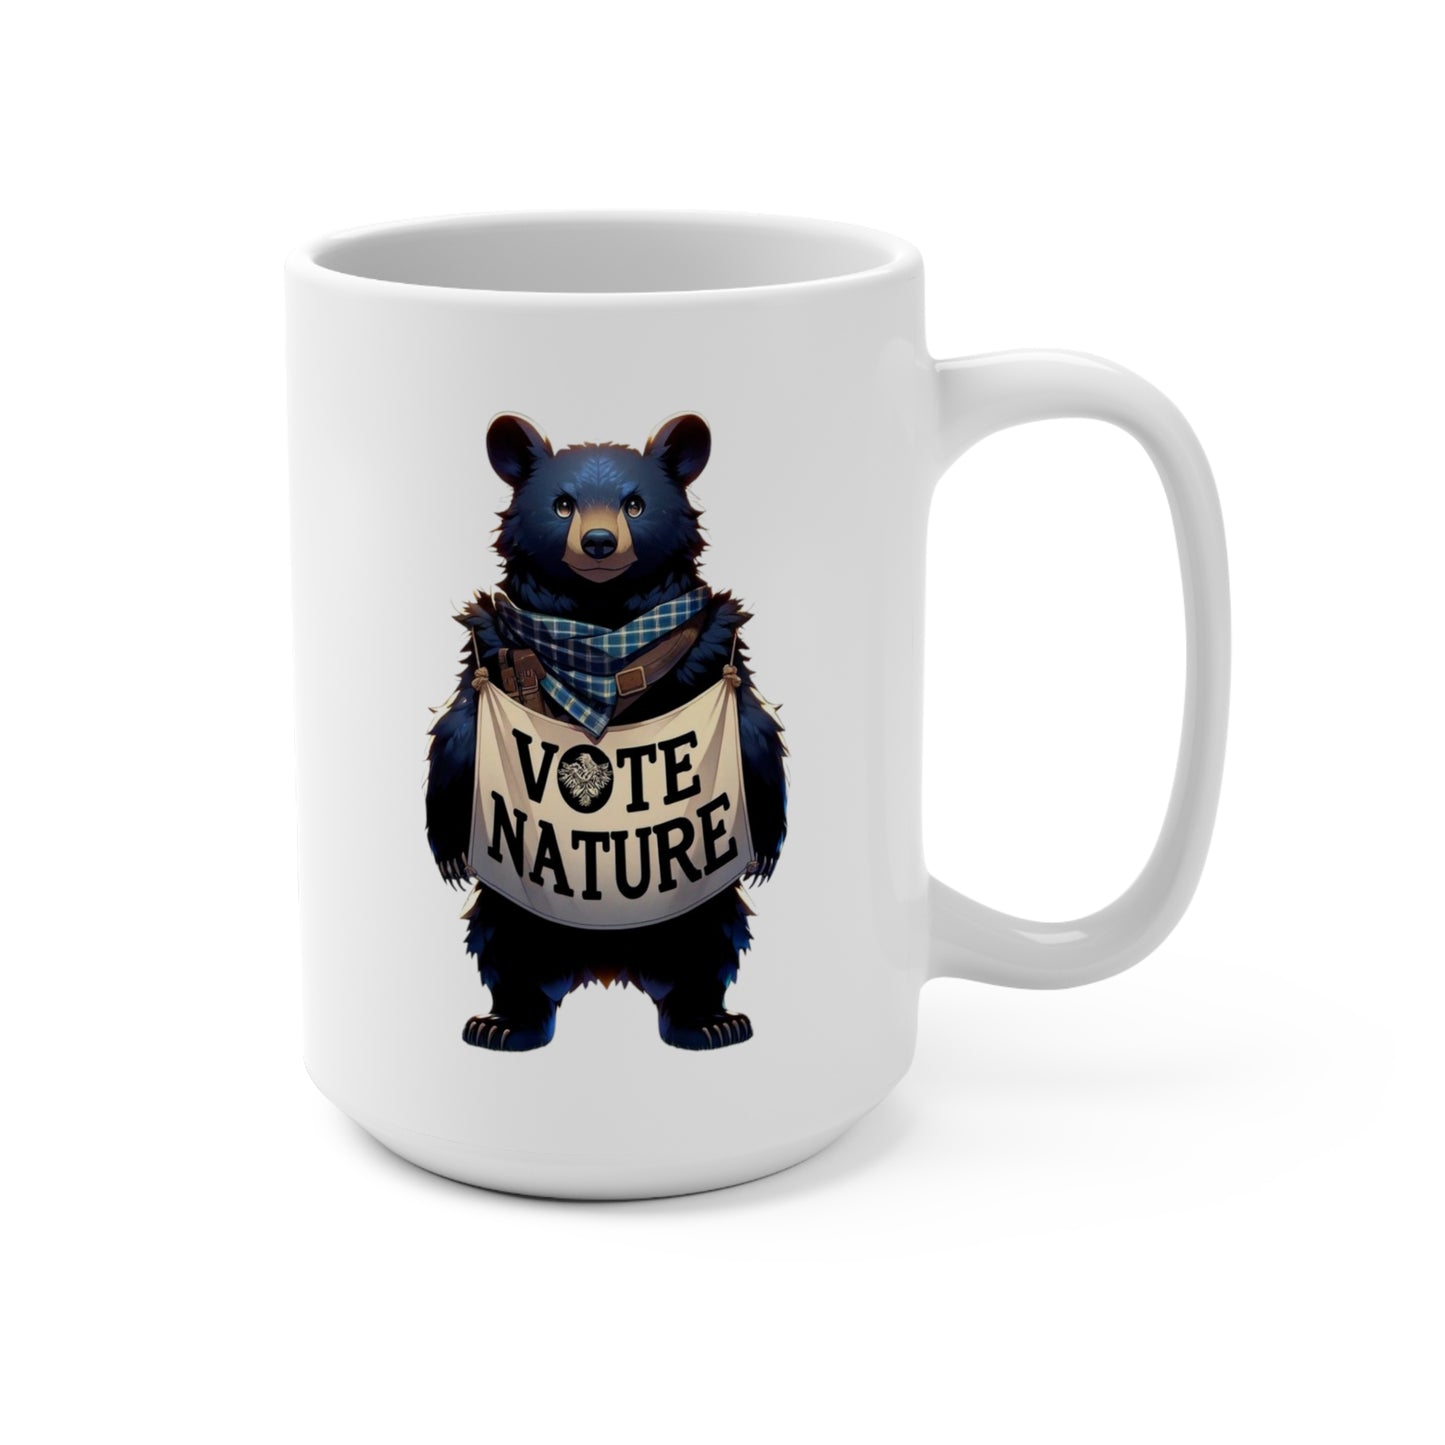 Inspirational Cute Bear Statement Coffee Mug (15oz): Vote Nature! Be a cute activist!